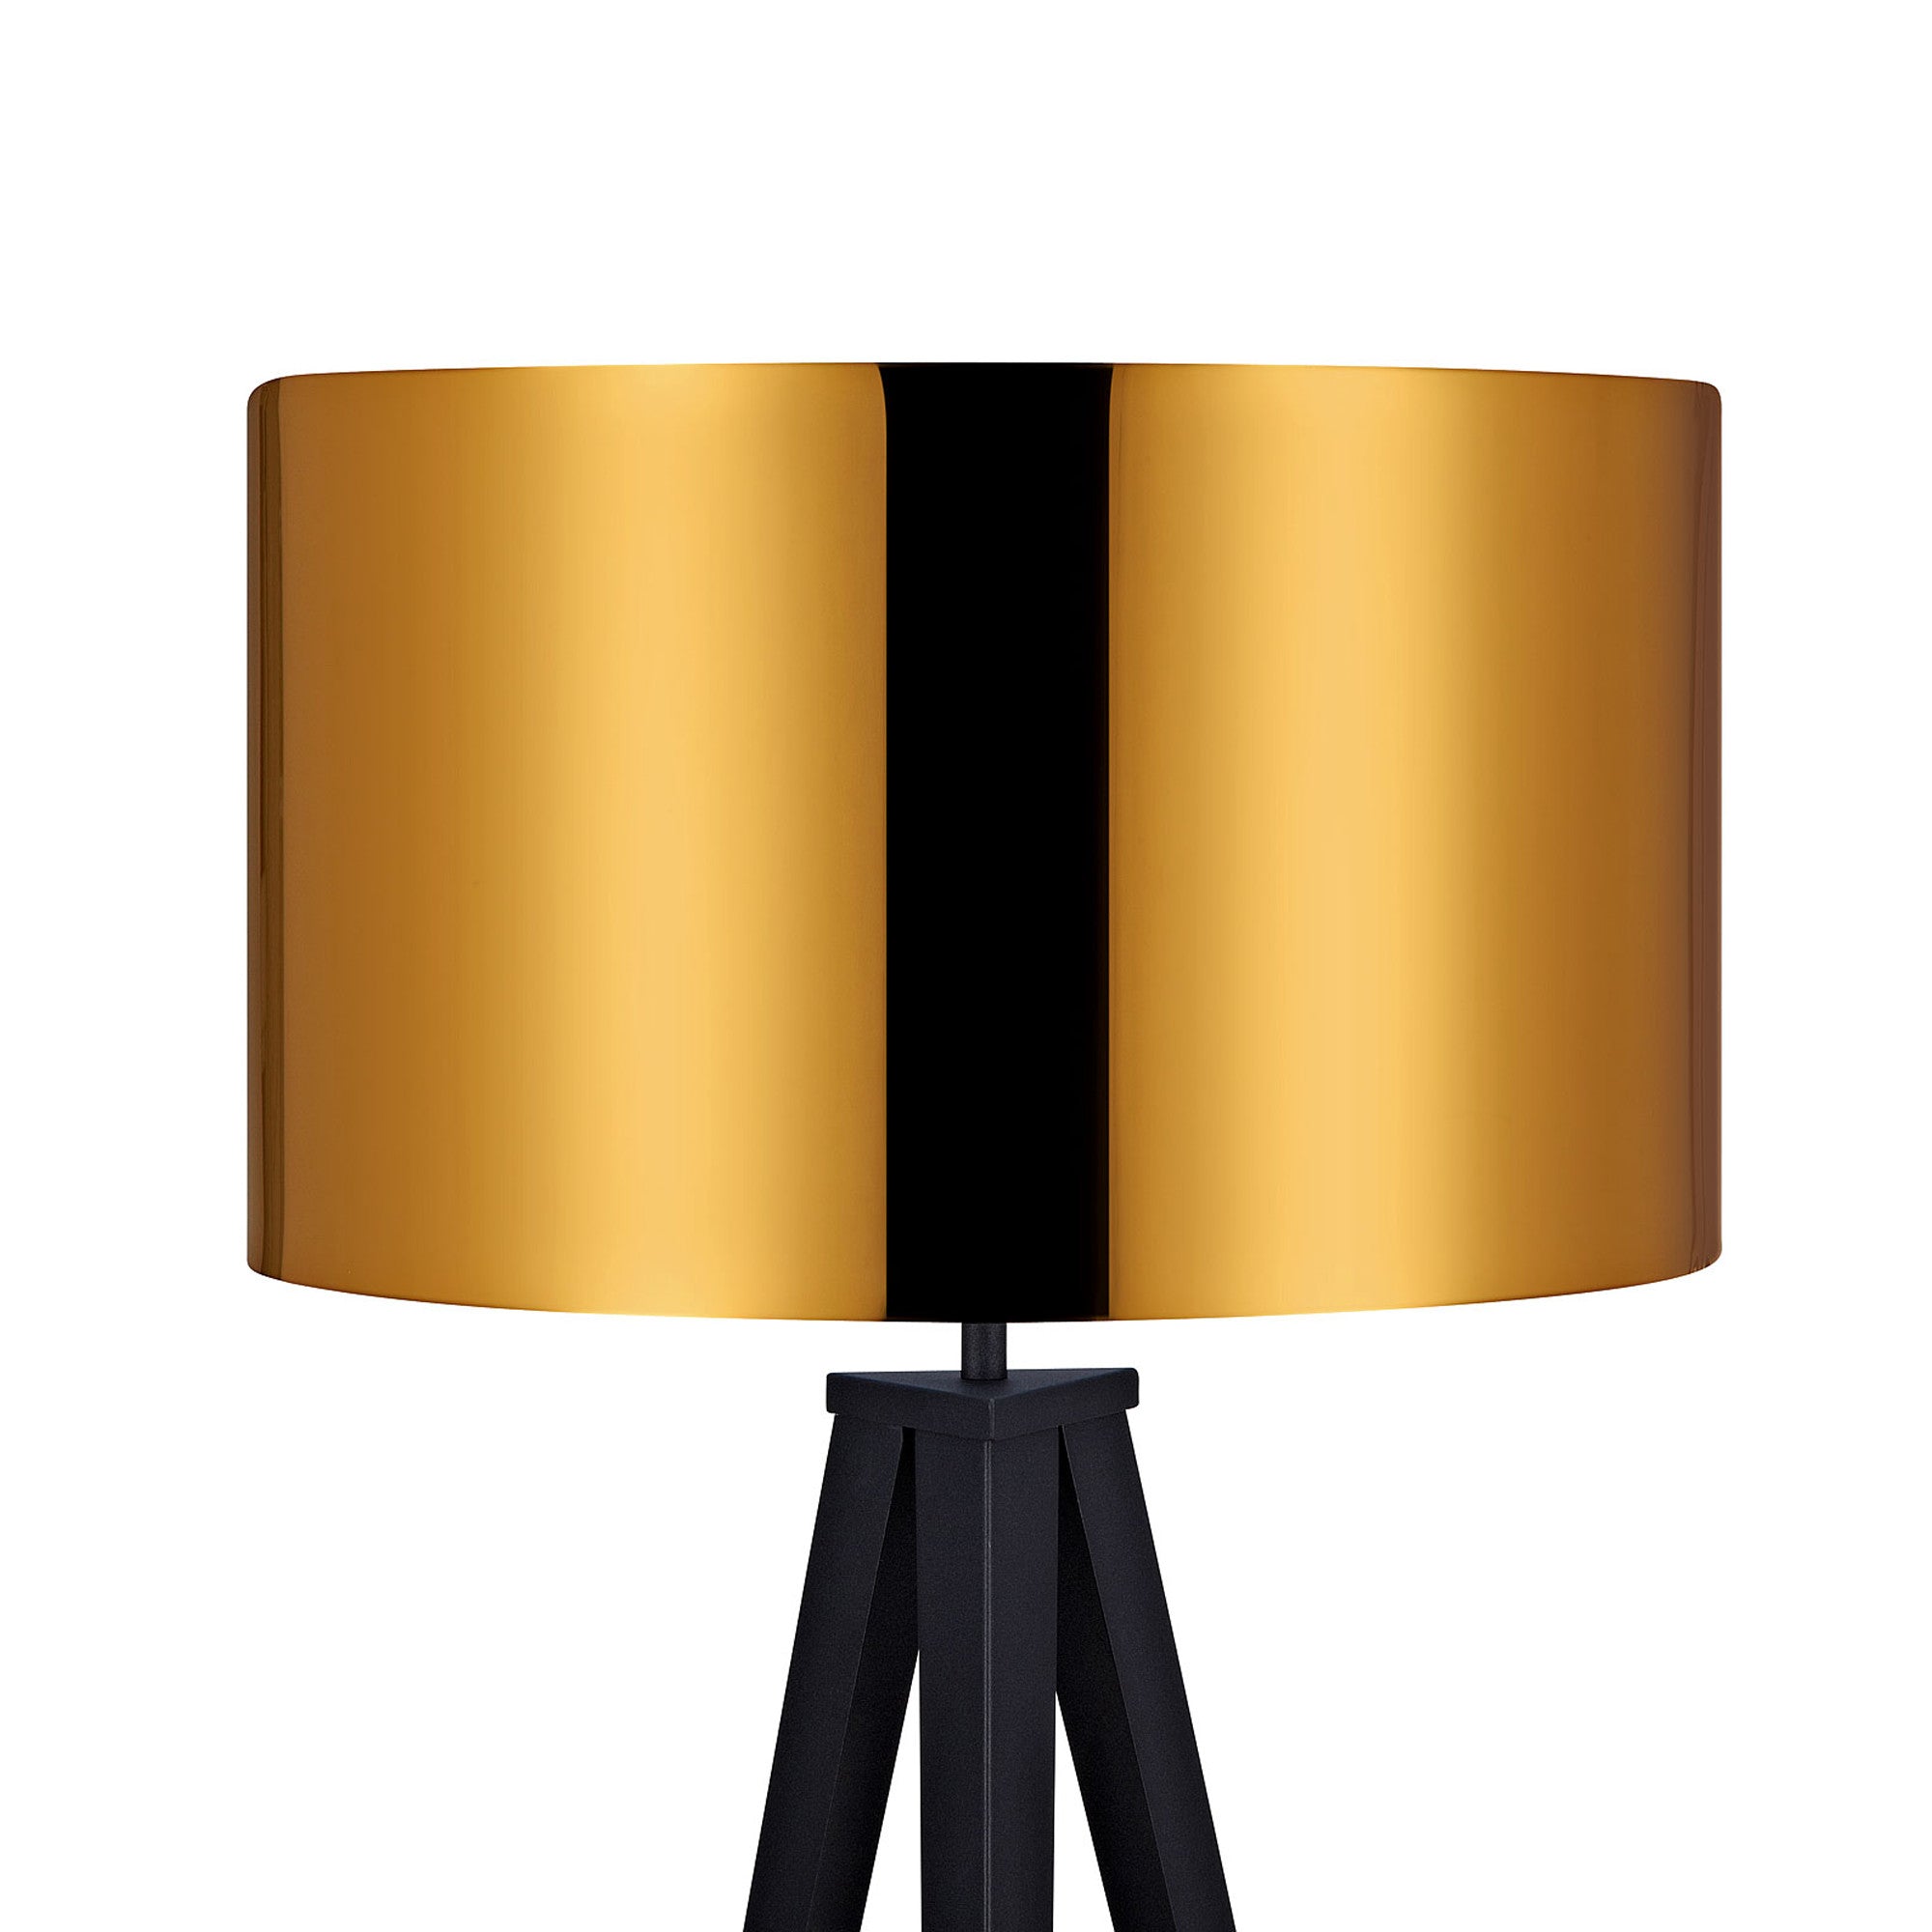 Teamson Home Romanza 60" Postmodern Tripod Floor Lamp with Drum Shade, Matte Black/Gold